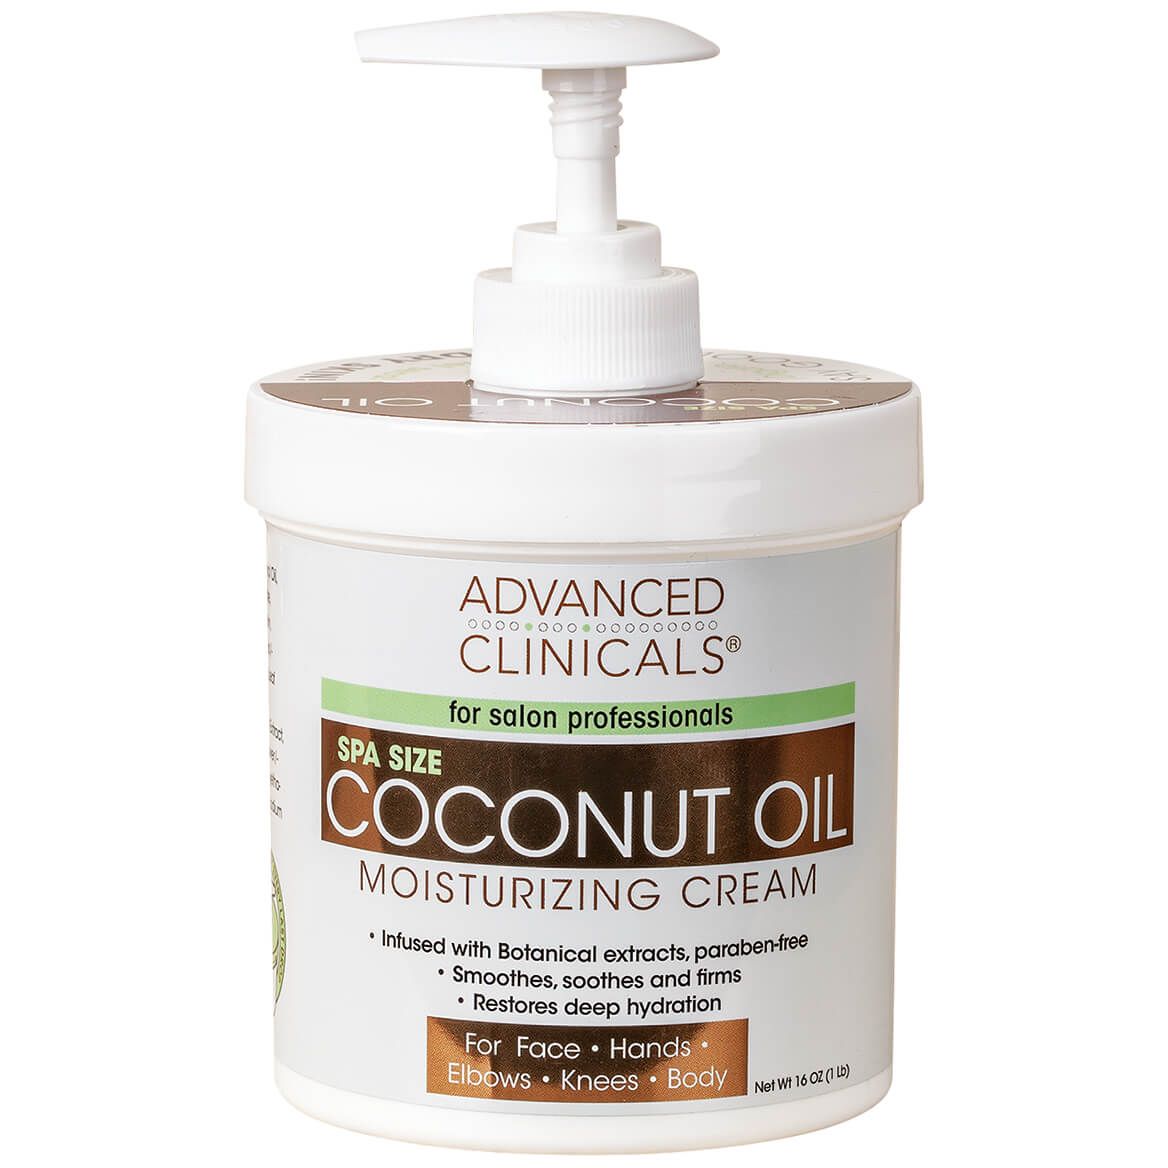 Advanced Clinicals® Coconut Oil Moisturizing Cream + '-' + 368953